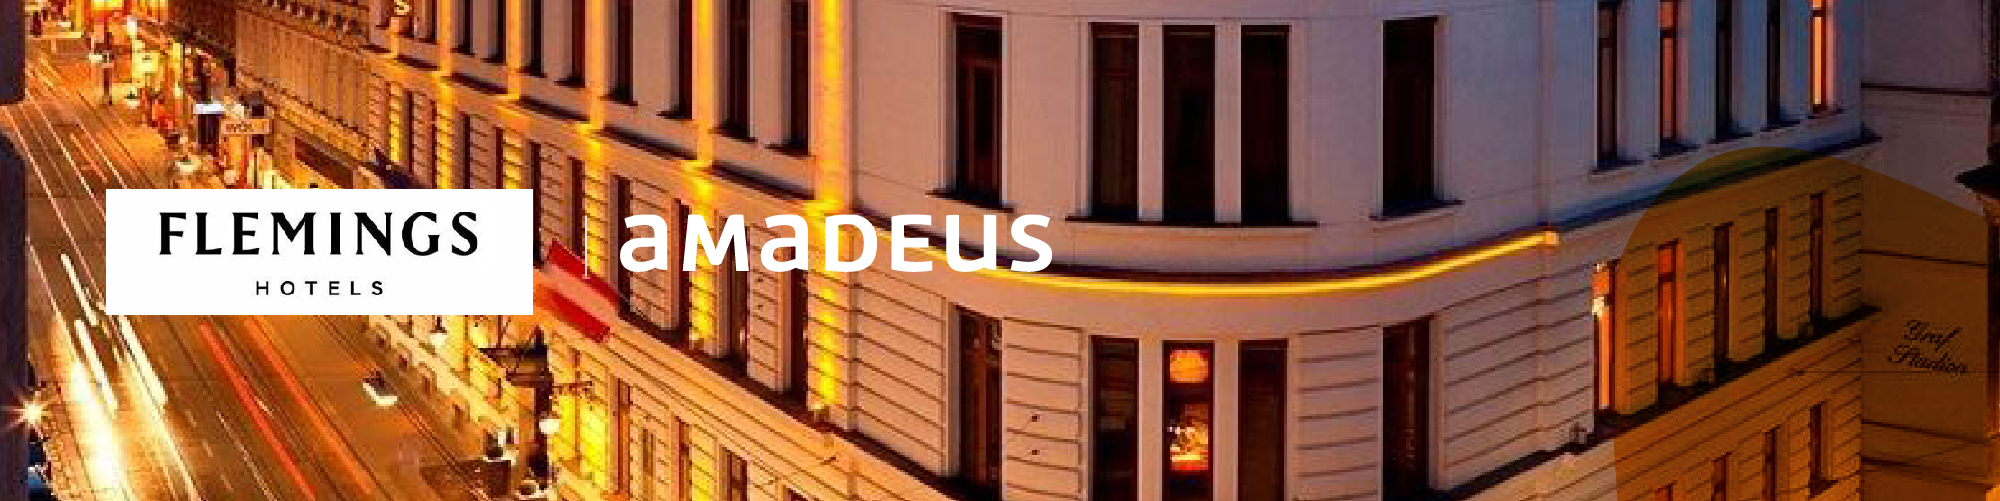 Flemings Hotels Pens Strategic Technology Partnership with Amadeus